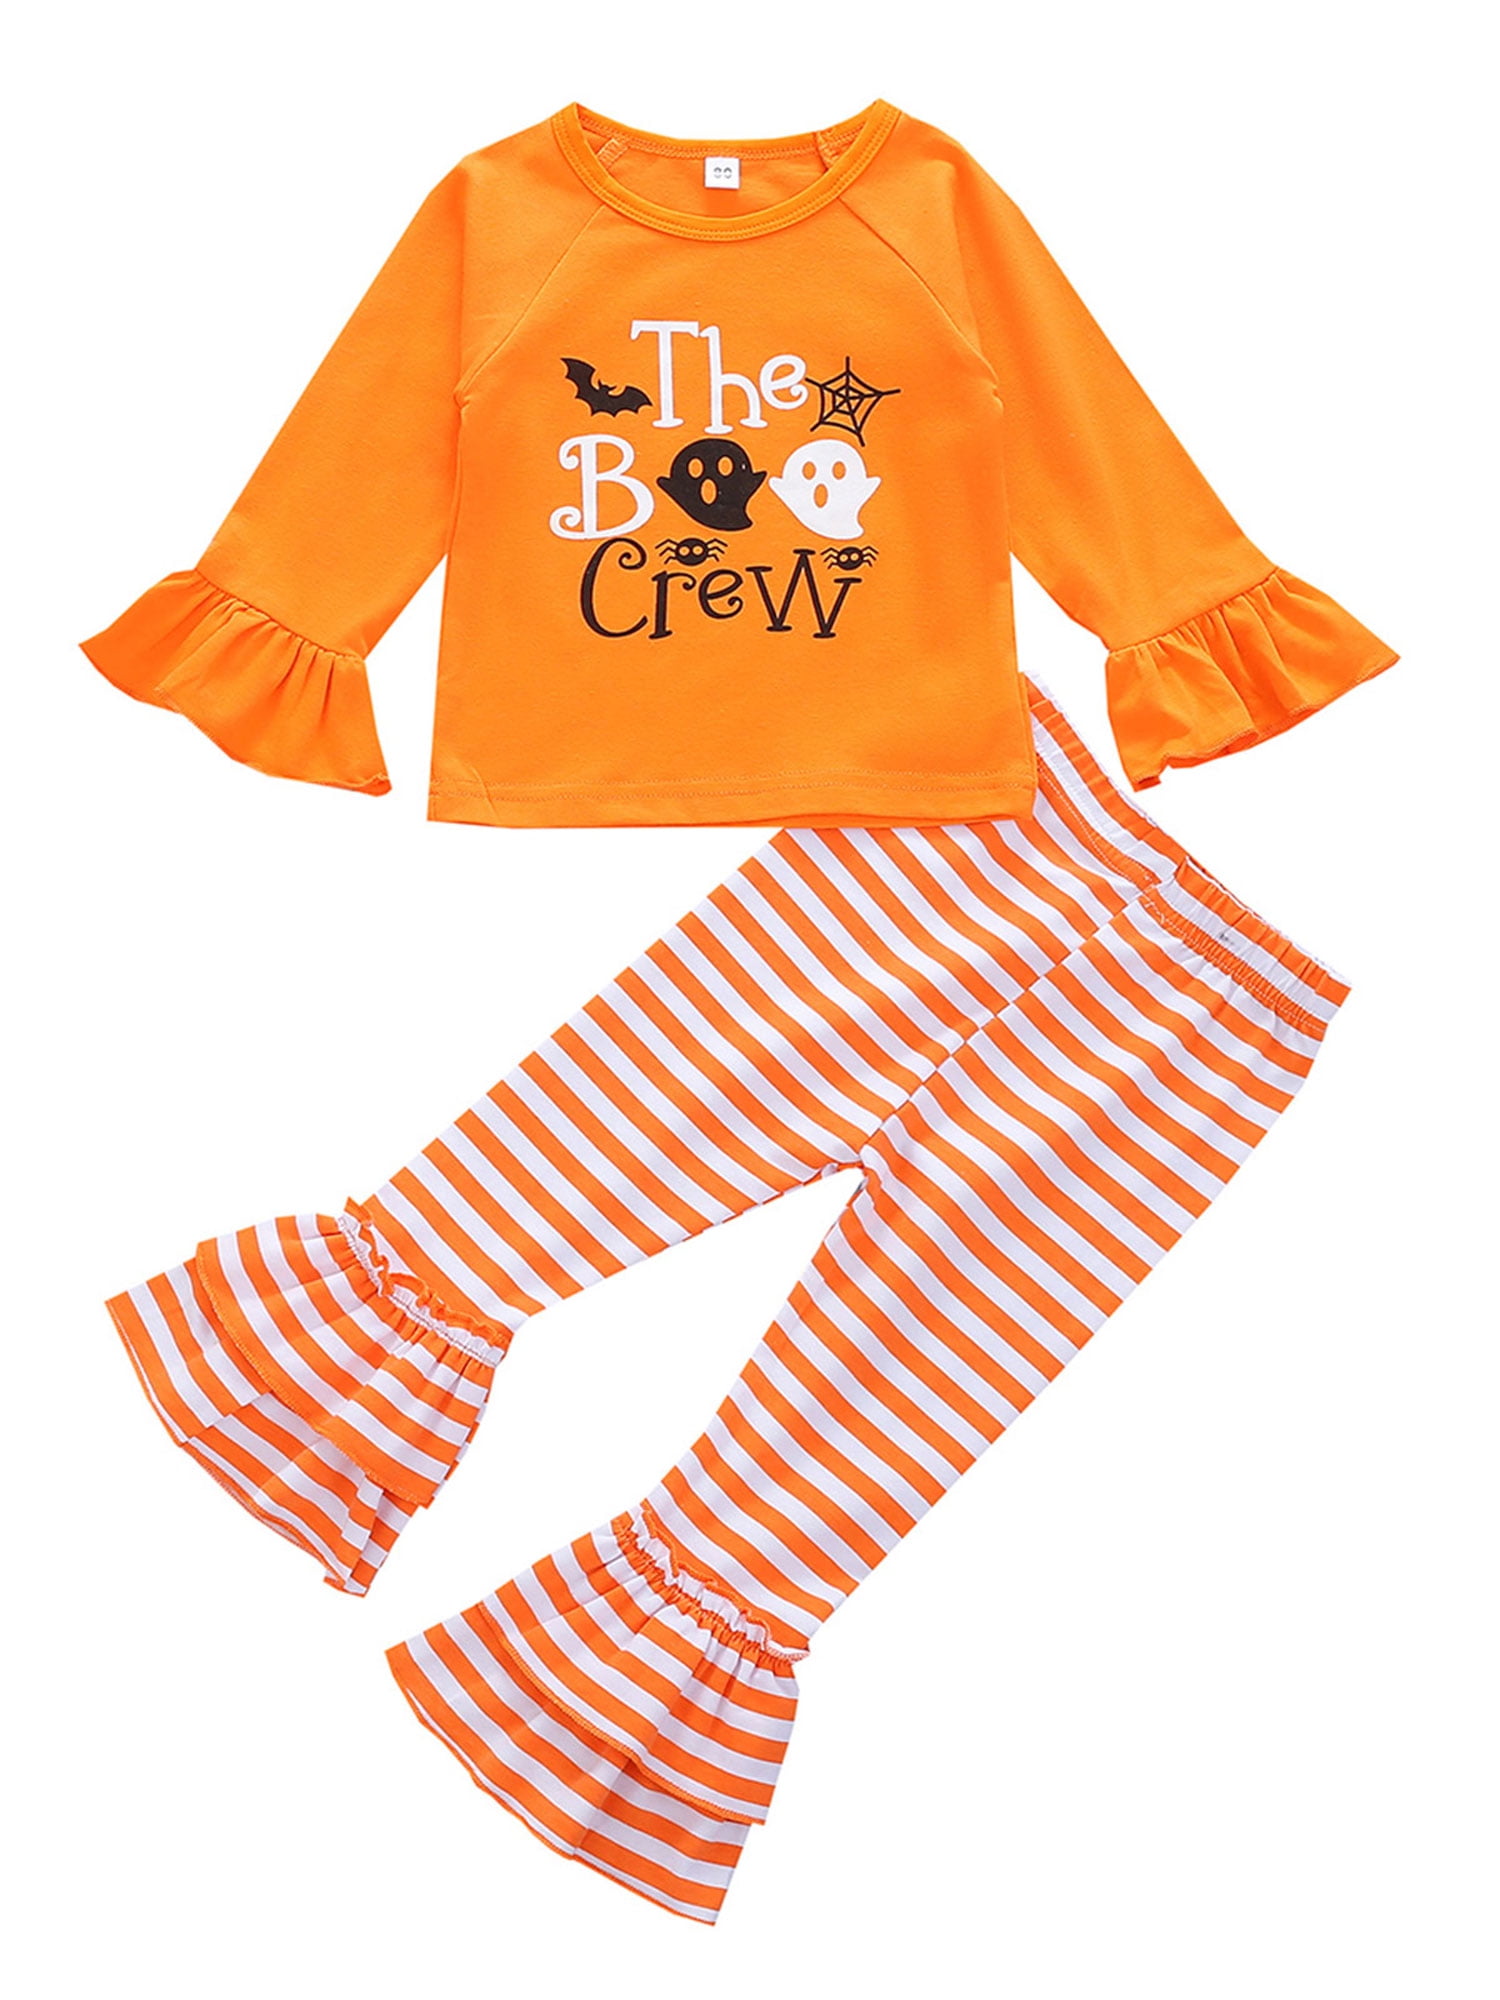 kaiCran Baby Boys Girls Short Sleeve Halloween Letter Cartoon Printed Tops Striped Pants Halloween Clothes Outfits Set